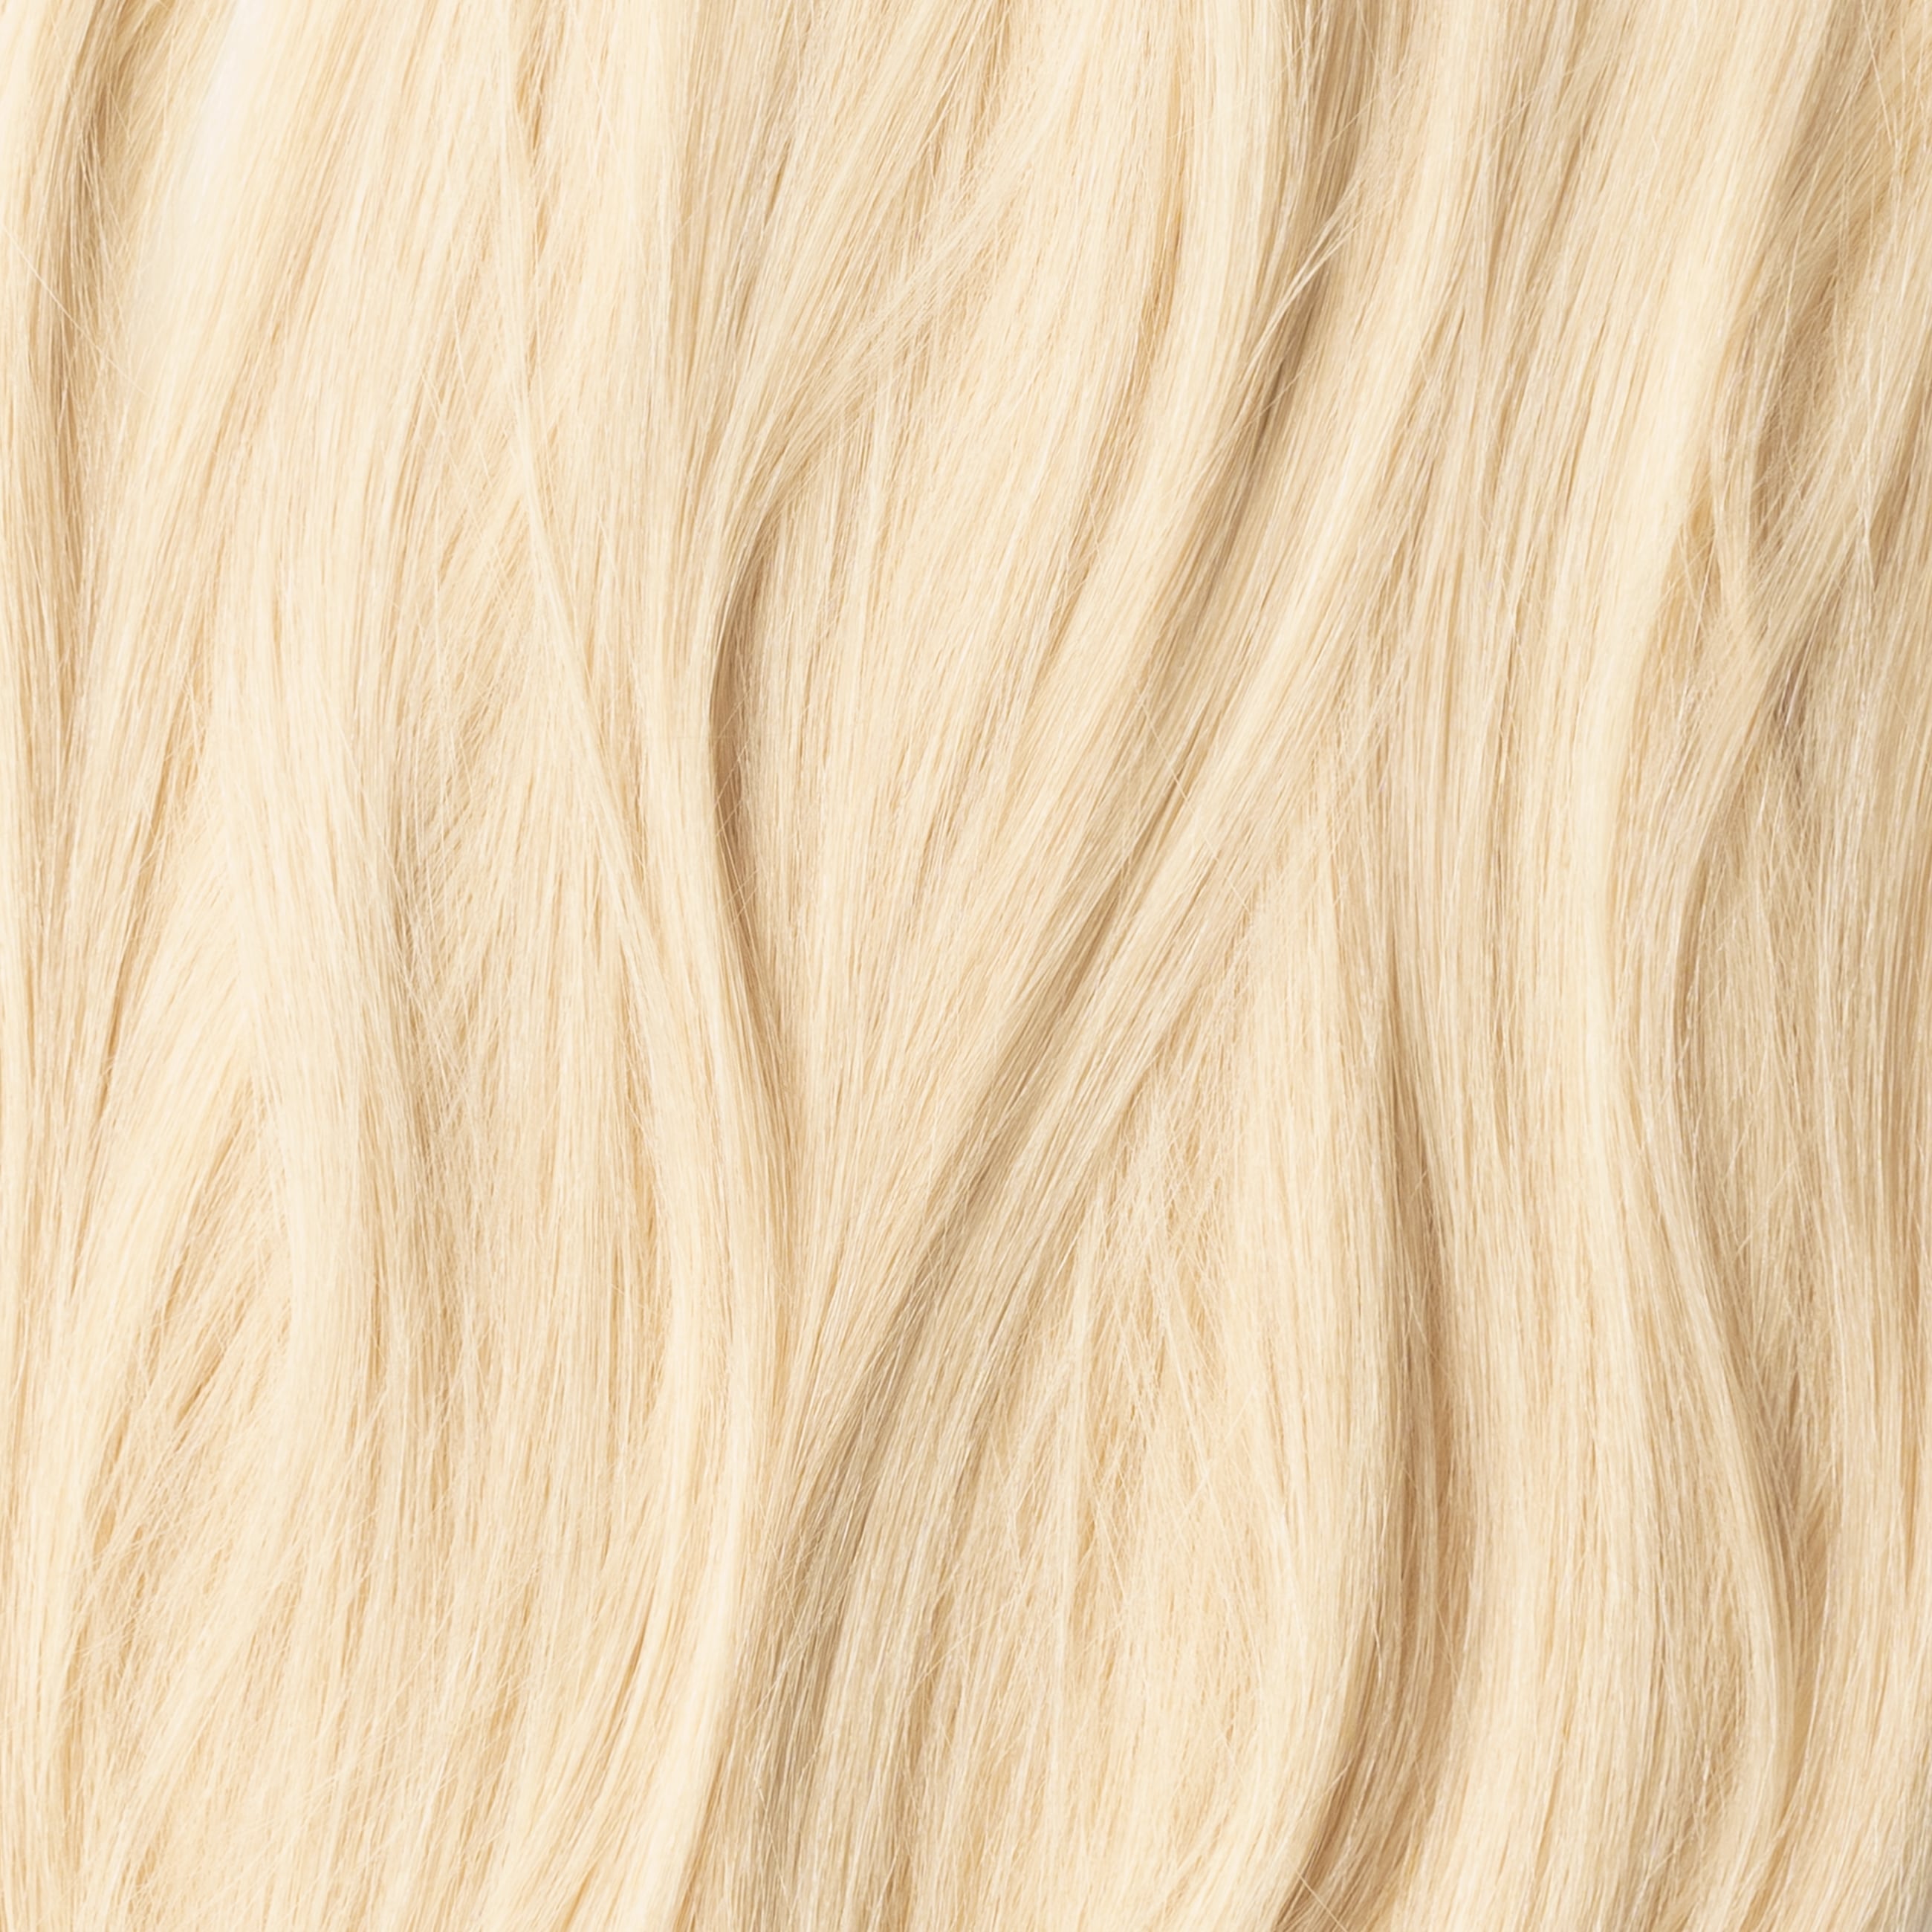 Hot fusion - Light Natural Blonde 60A